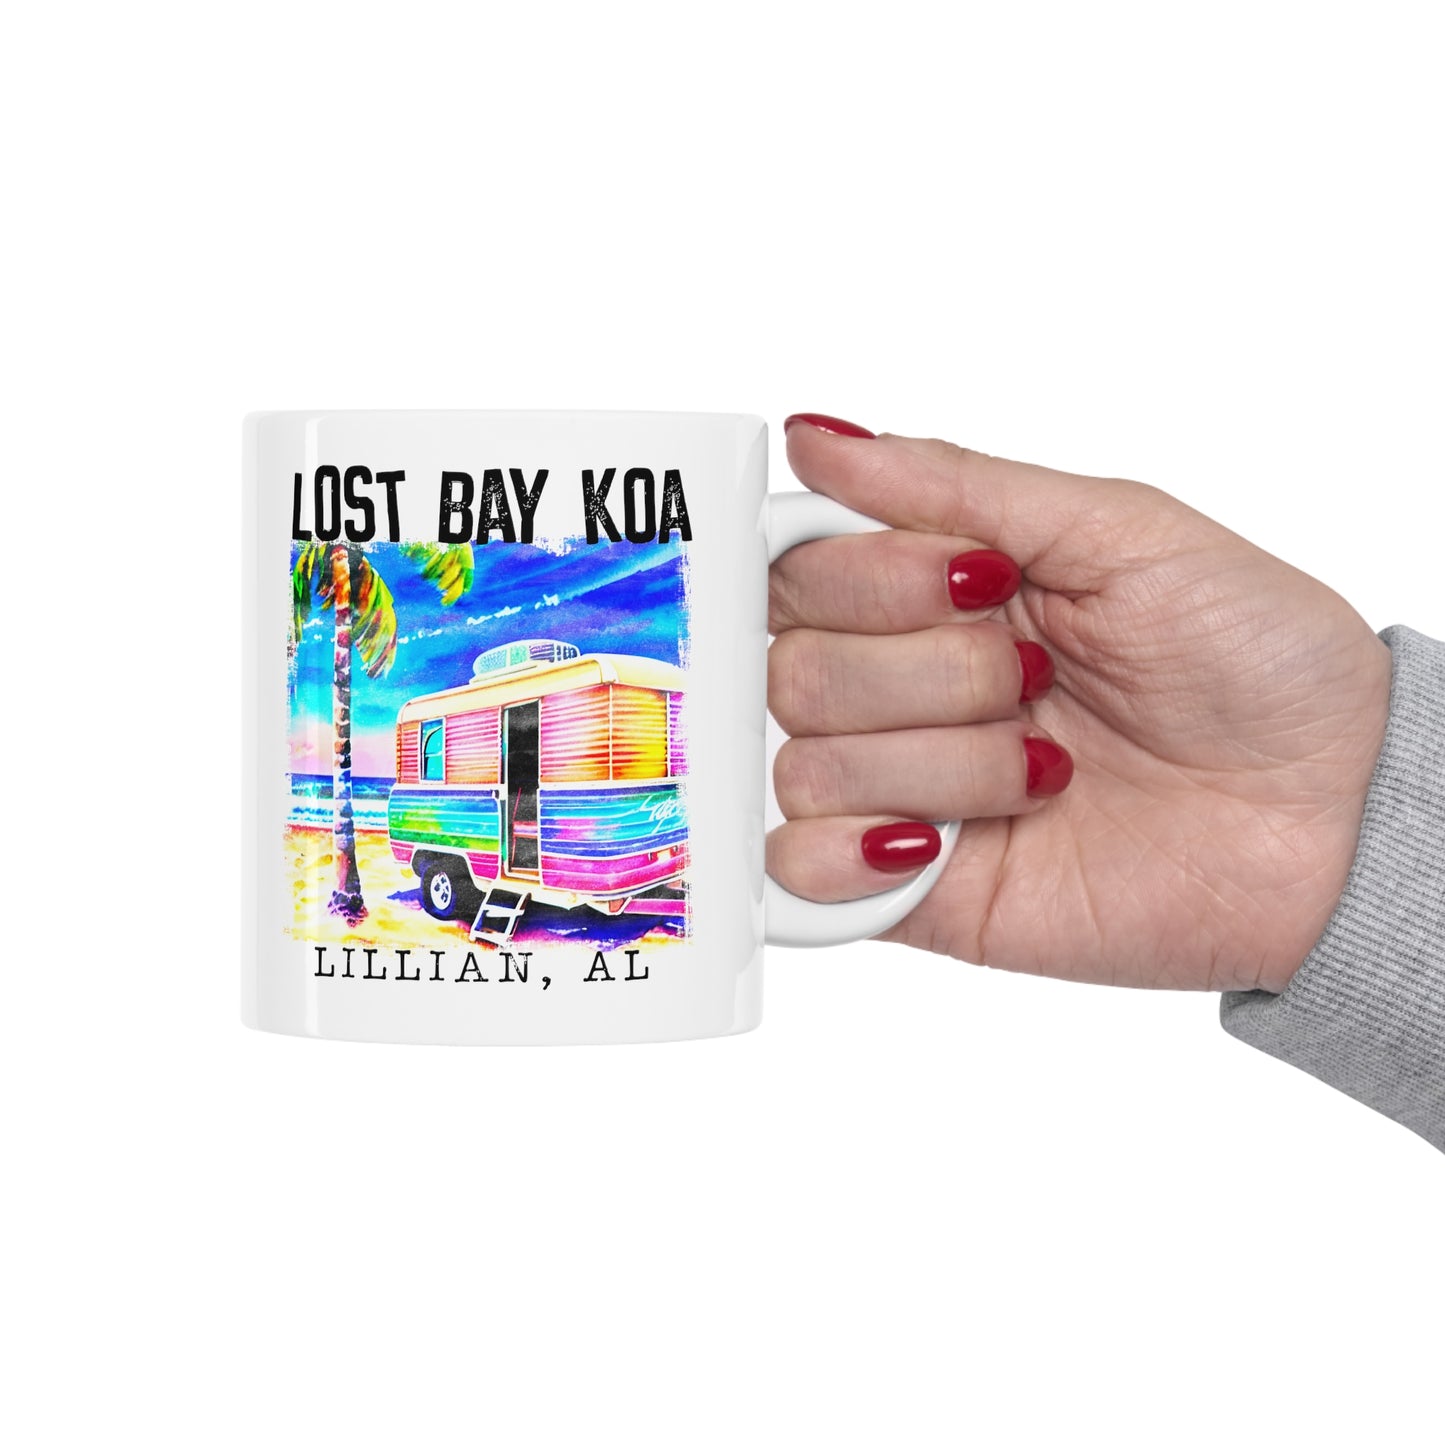 Lost Bay Camper- Ceramic Mug 11oz